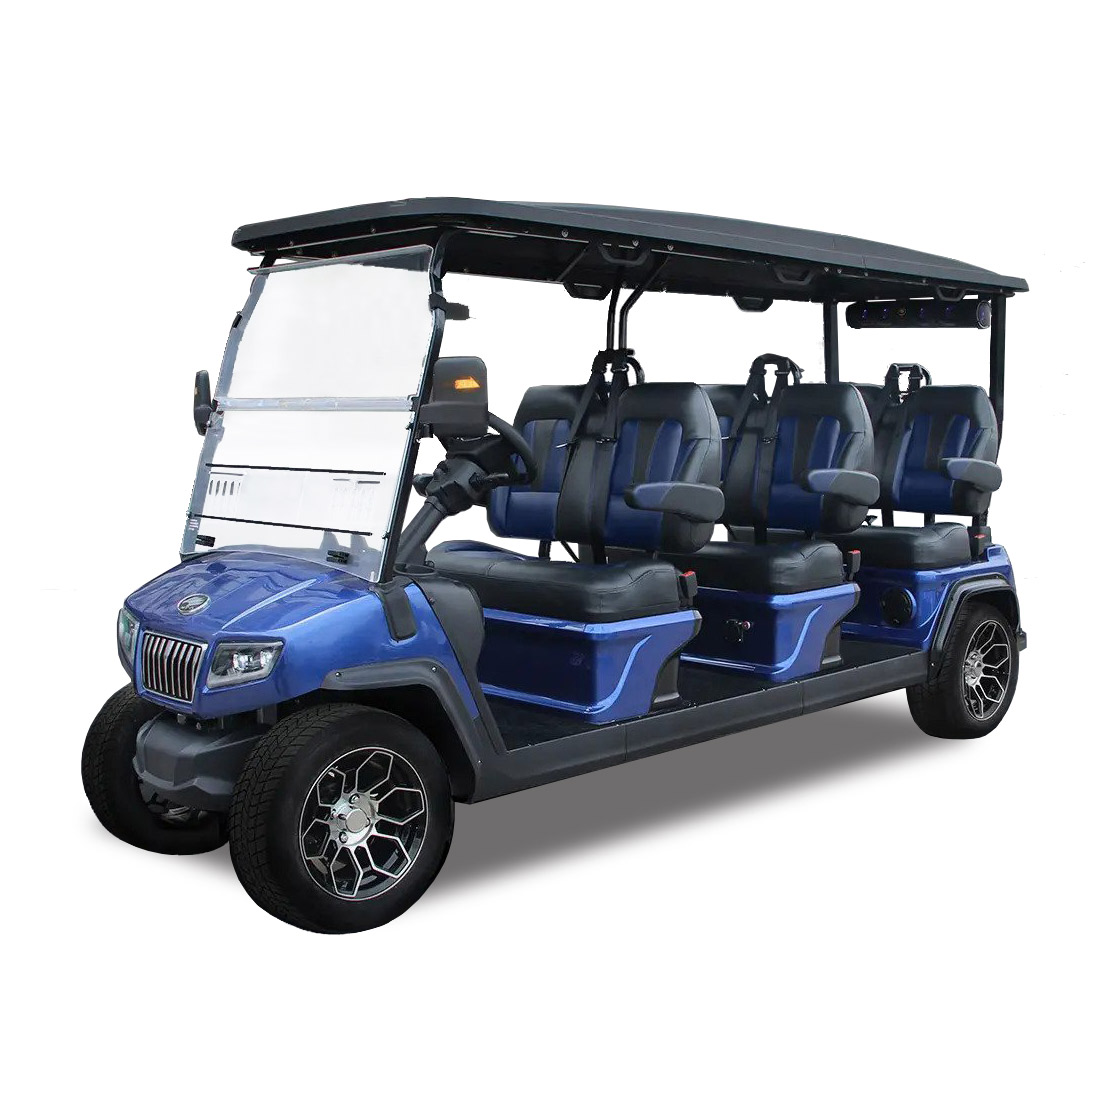 Golf Cart Review: Evolution D5 Ranger-6 Golf Cart for Southern California Transportation